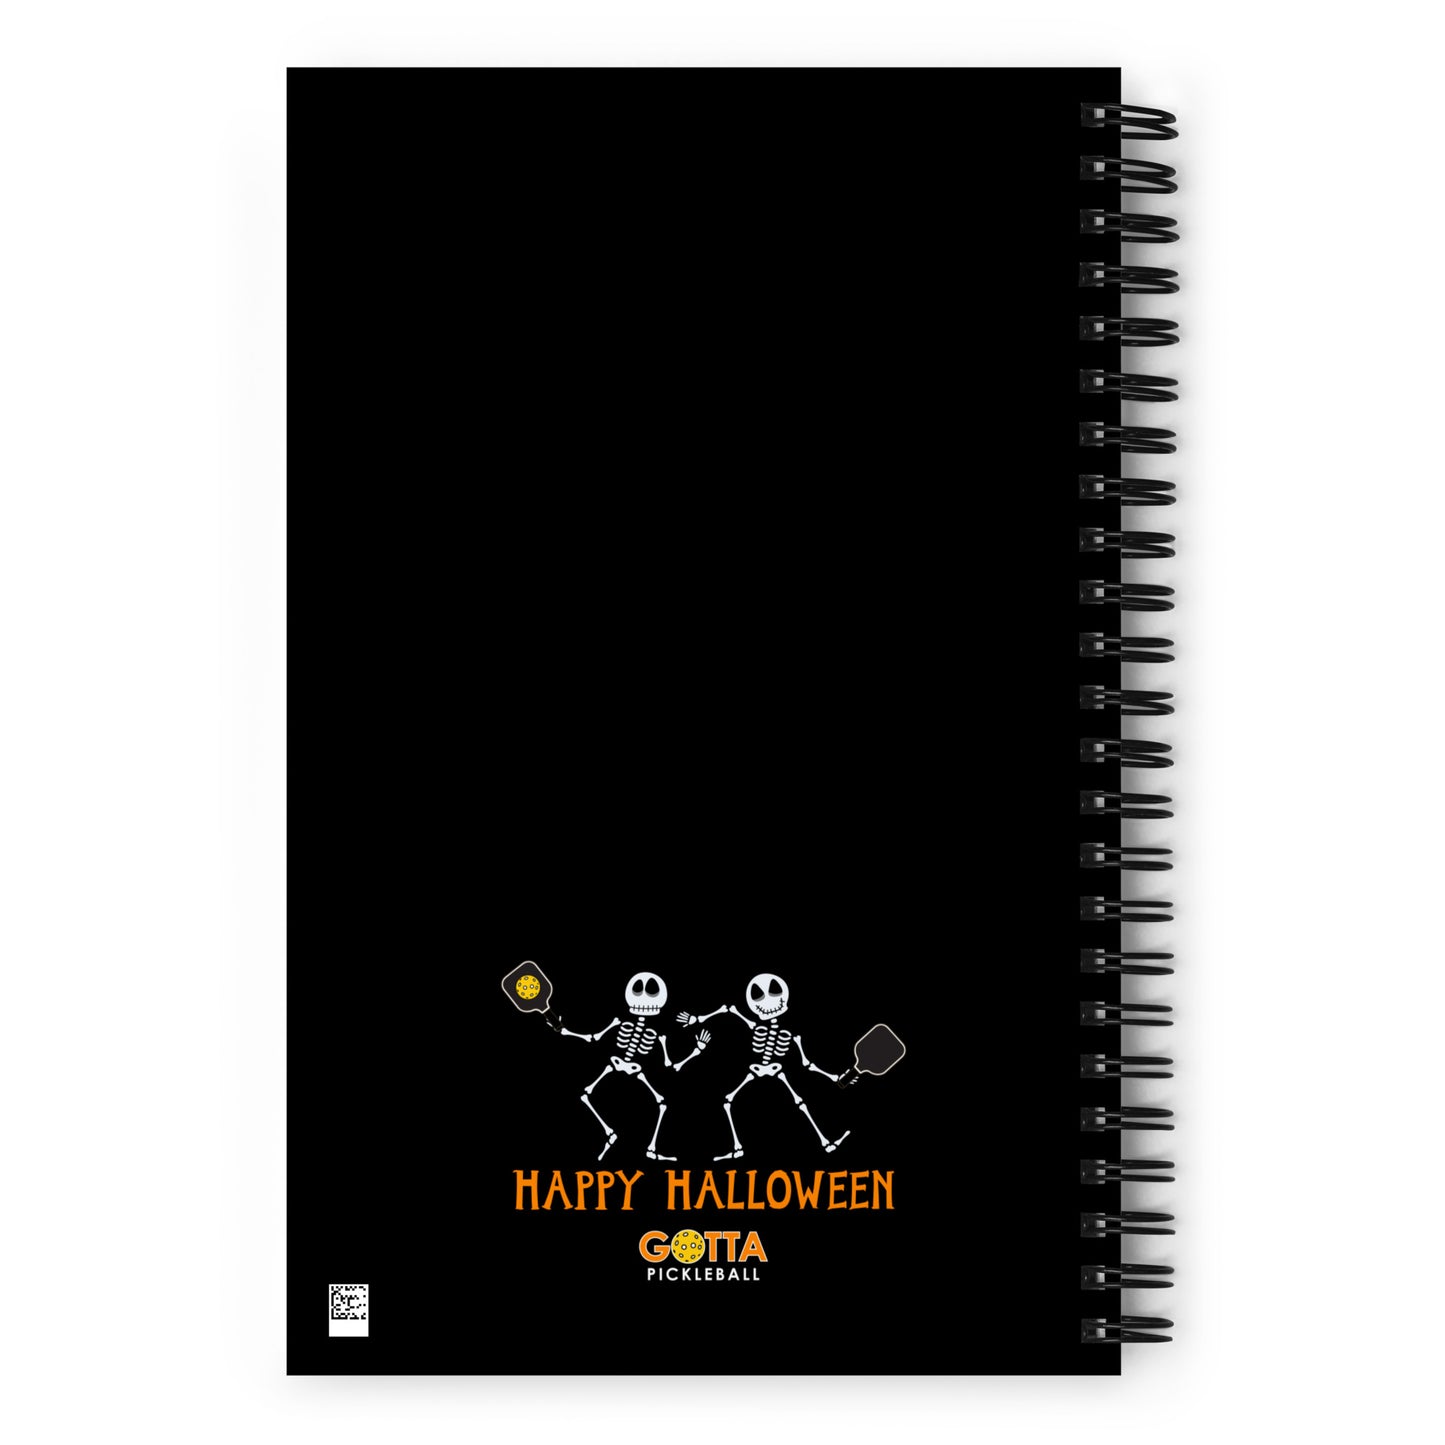 Spiral notebook: Happy Halloween Pickleball Playing Skeletons